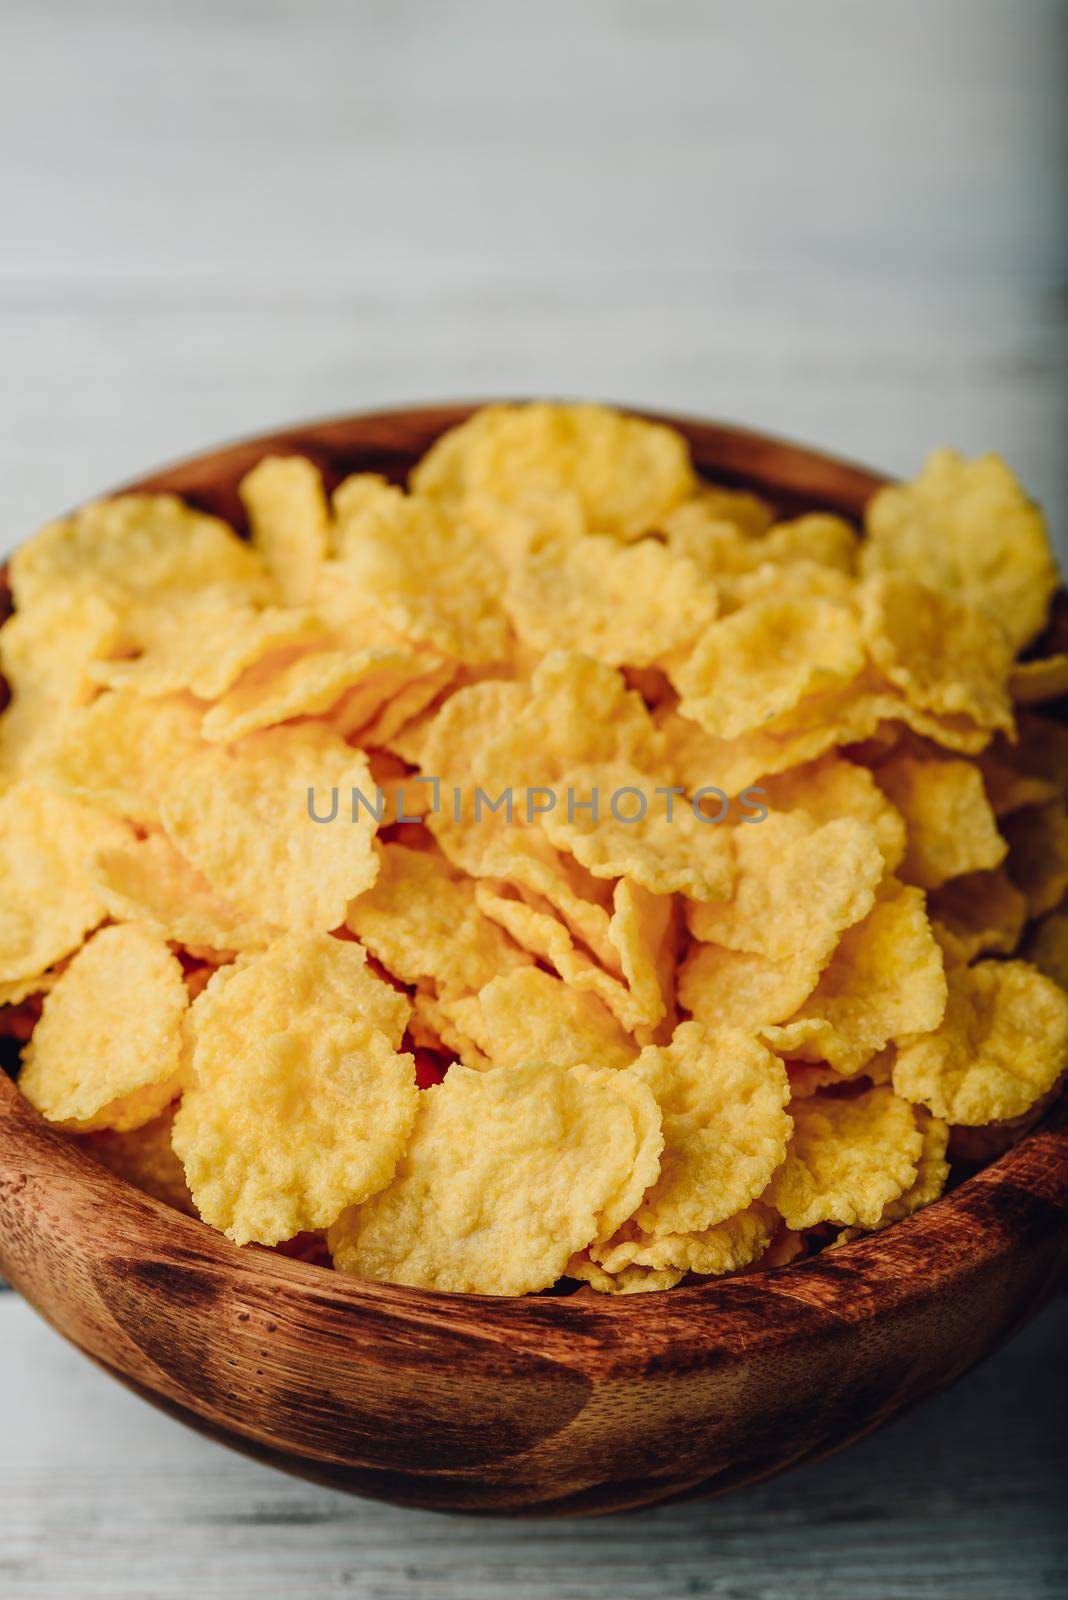 Breakfast cornflakes in a wooden bowl by Seva_blsv